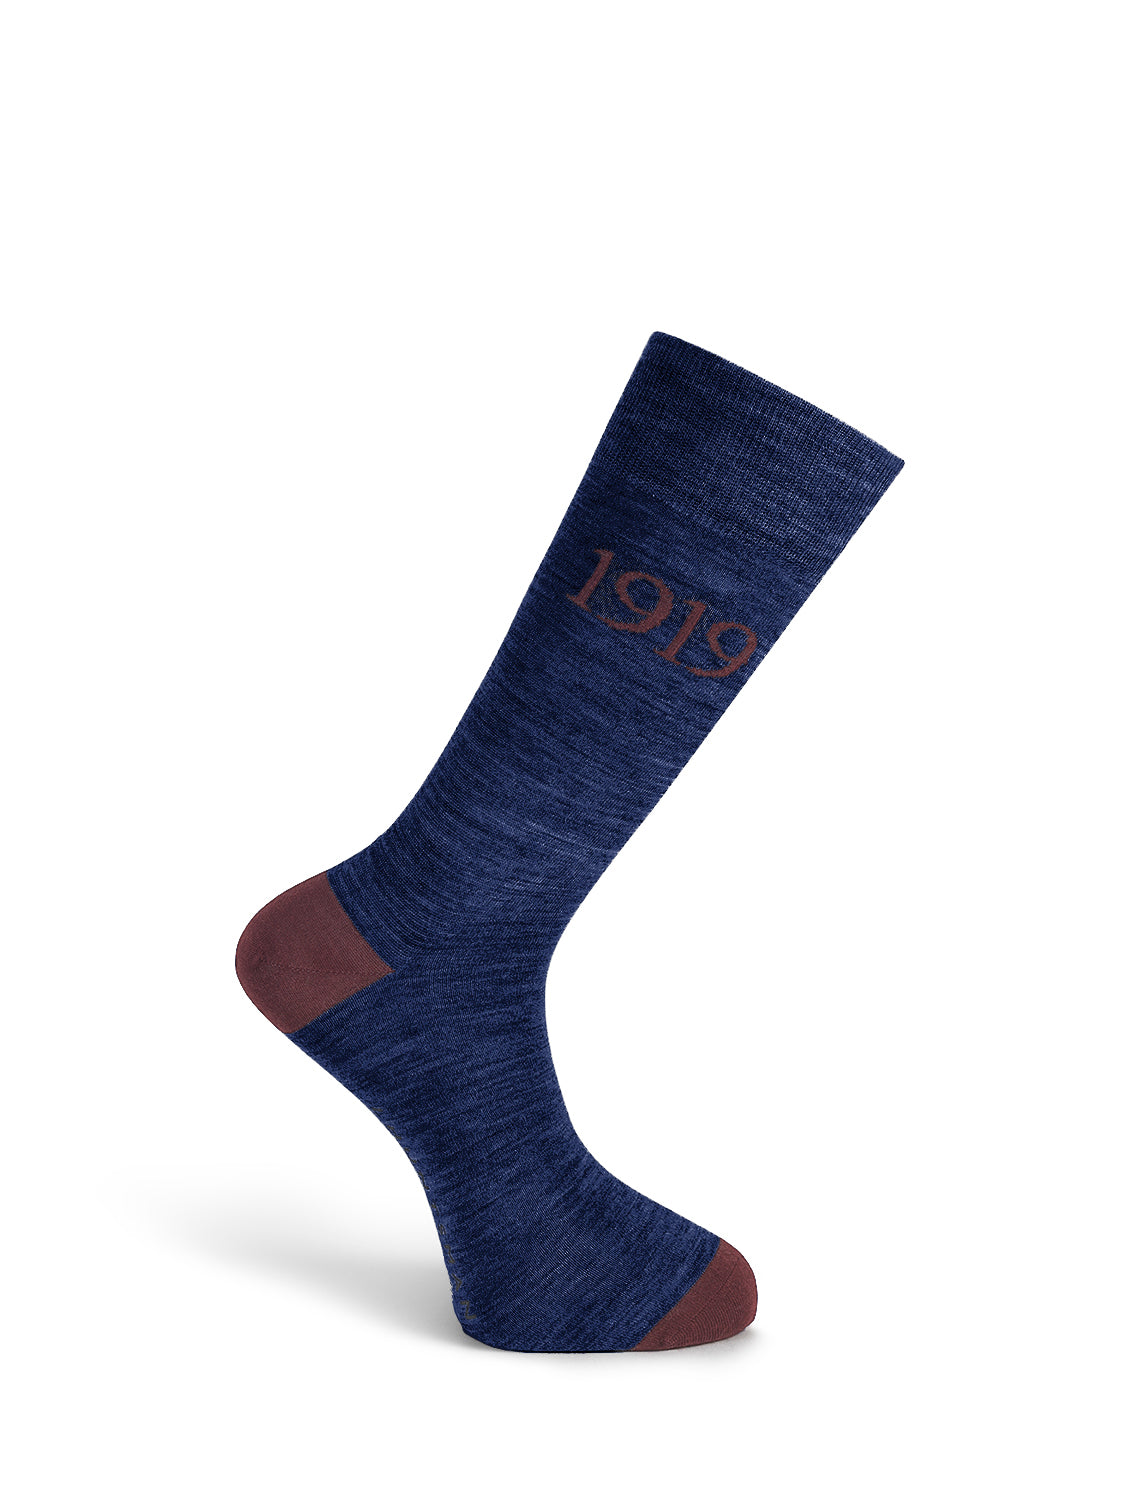 Navy/Claret Socks